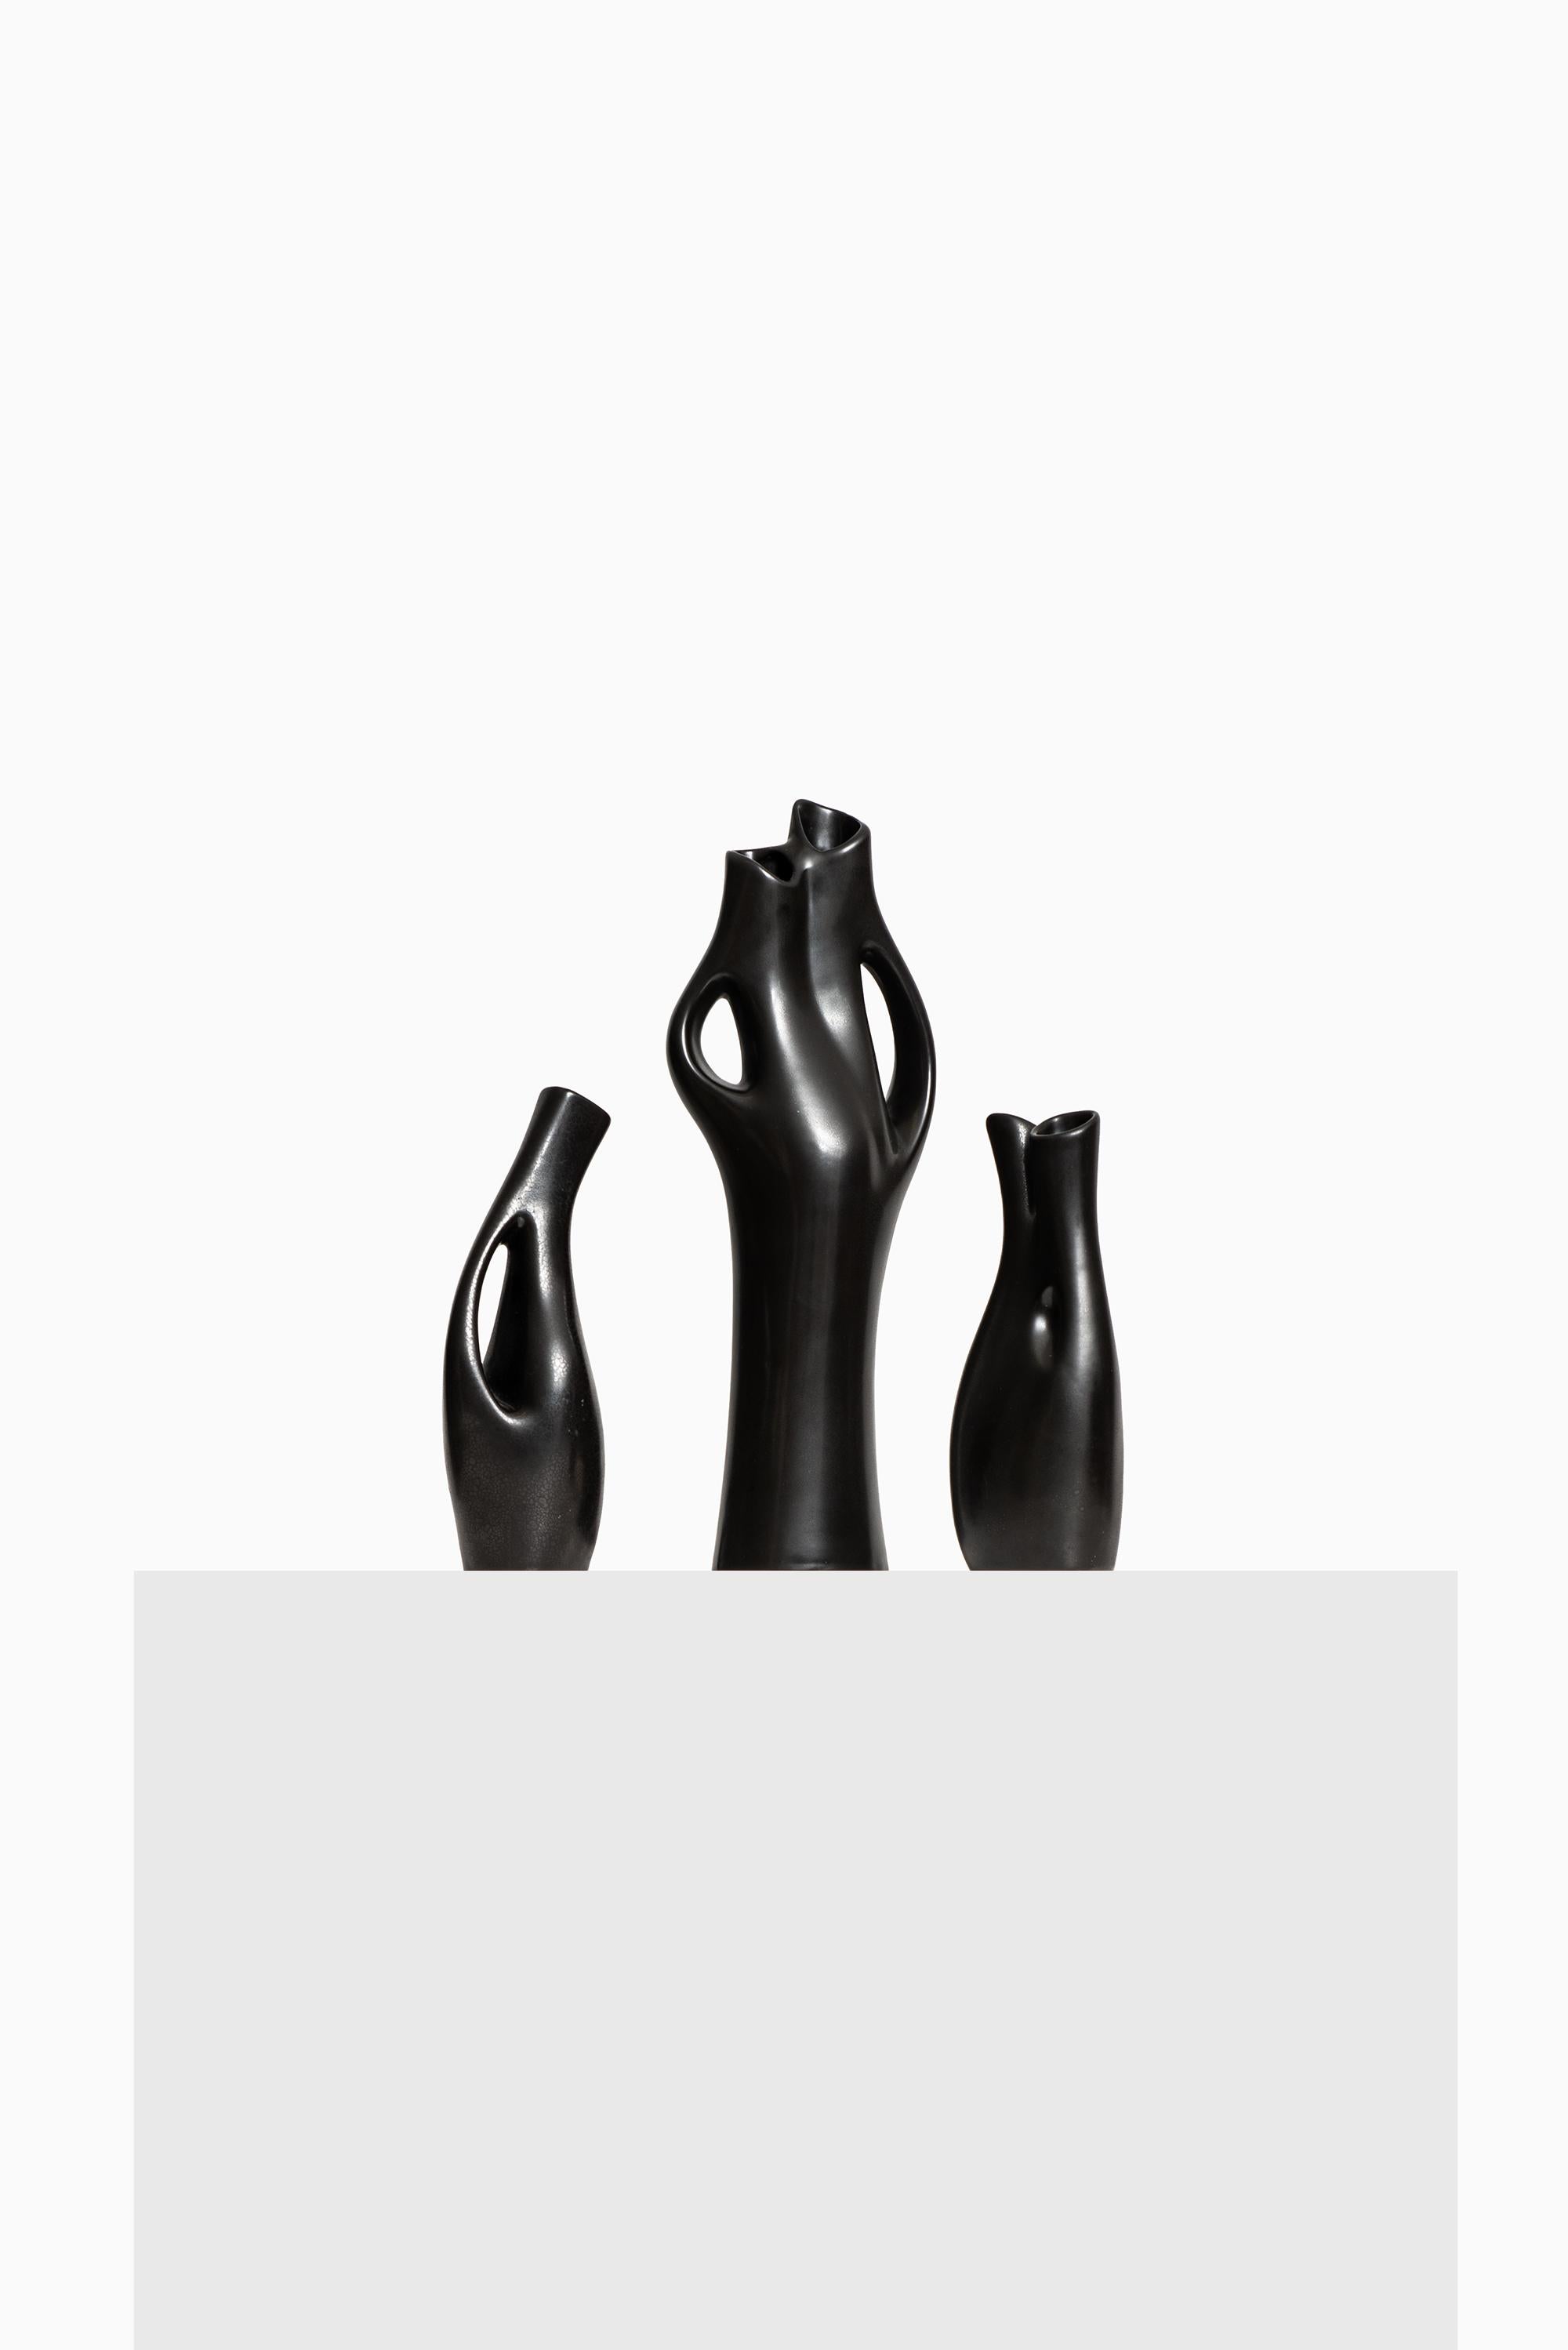 Set of 3 stoneware vases Mangania designed by Lillemor Mannerheim. Produced by Upsala Ekeby in Sweden.